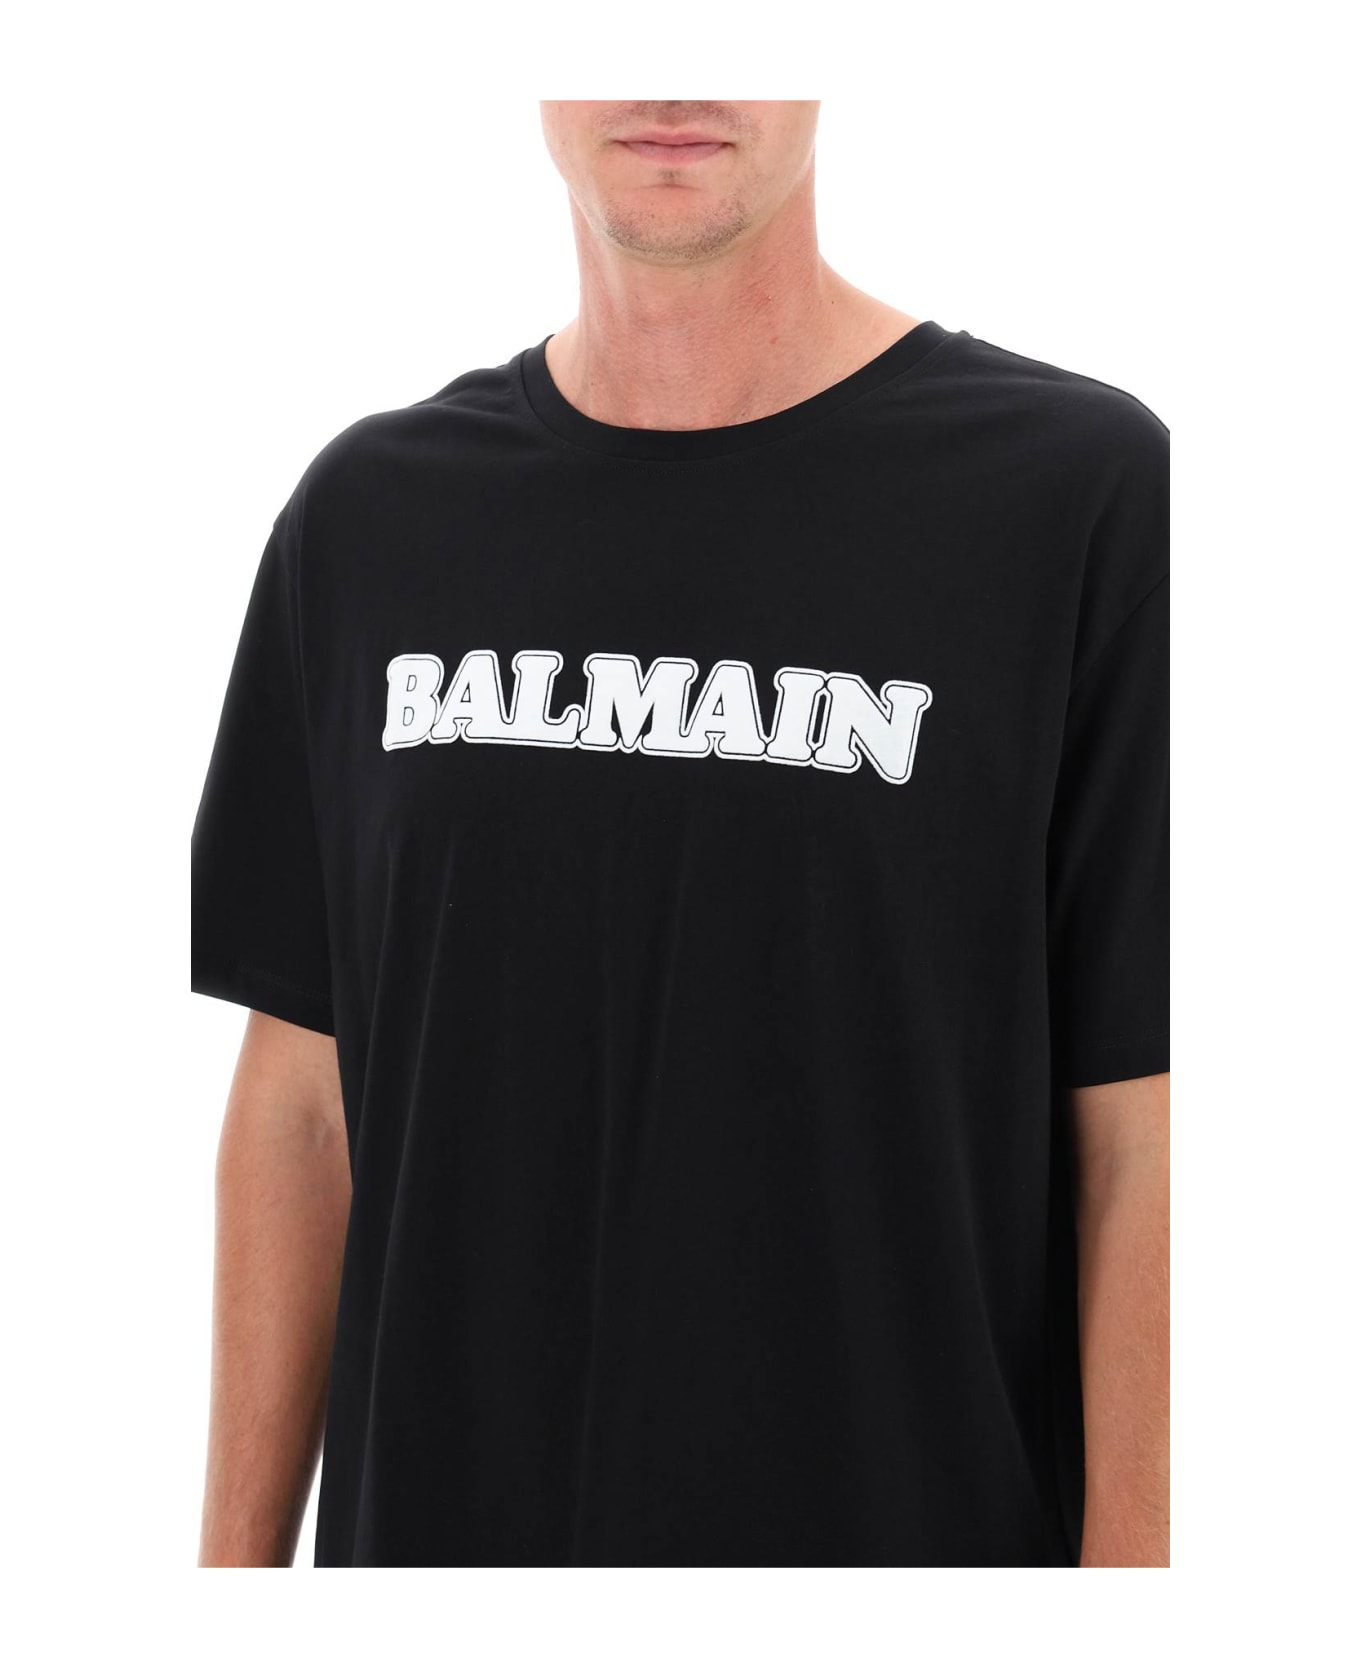 Balmain Retro Flock T-shirt - NOIR BLANC (Black) シャツ